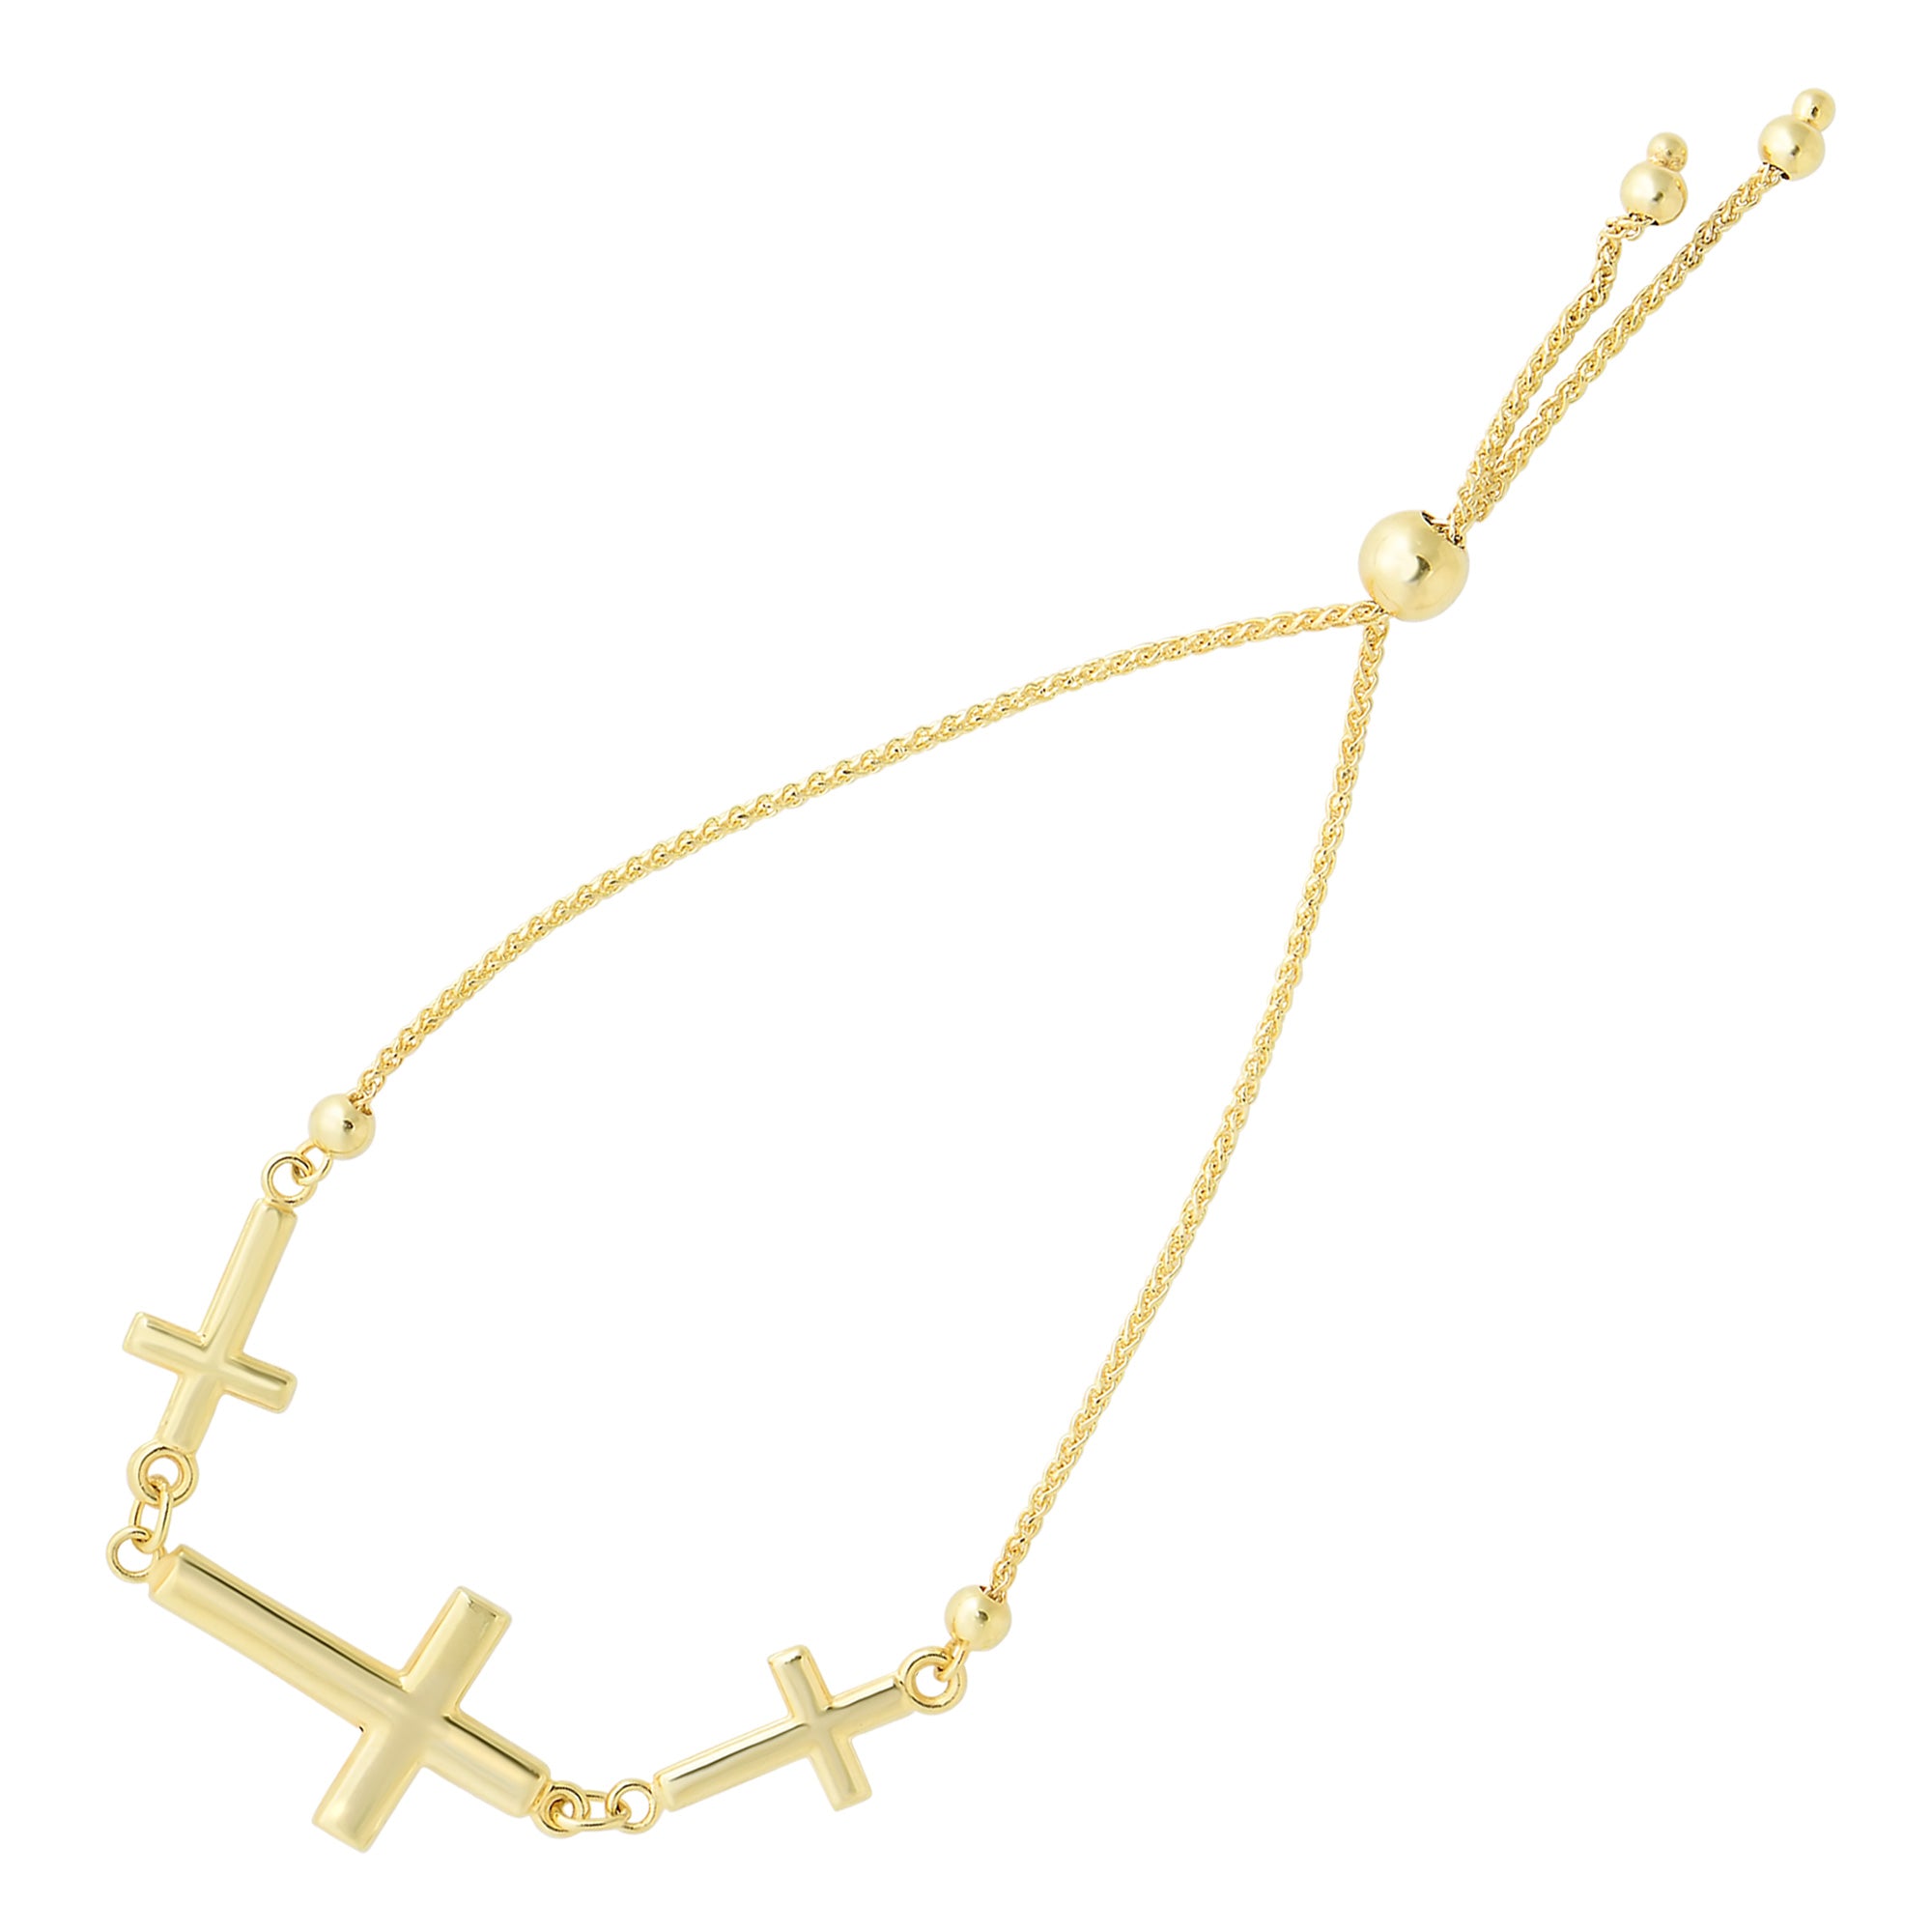 Sideways Crosses Theme Bolo Friendship Adjustable Bracelet In 14K Yellow Gold, 9.25" fine designer jewelry for men and women